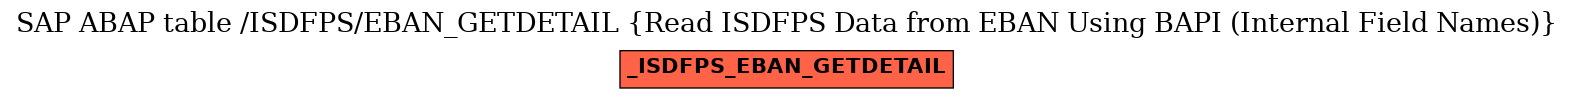 E-R Diagram for table /ISDFPS/EBAN_GETDETAIL (Read ISDFPS Data from EBAN Using BAPI (Internal Field Names))